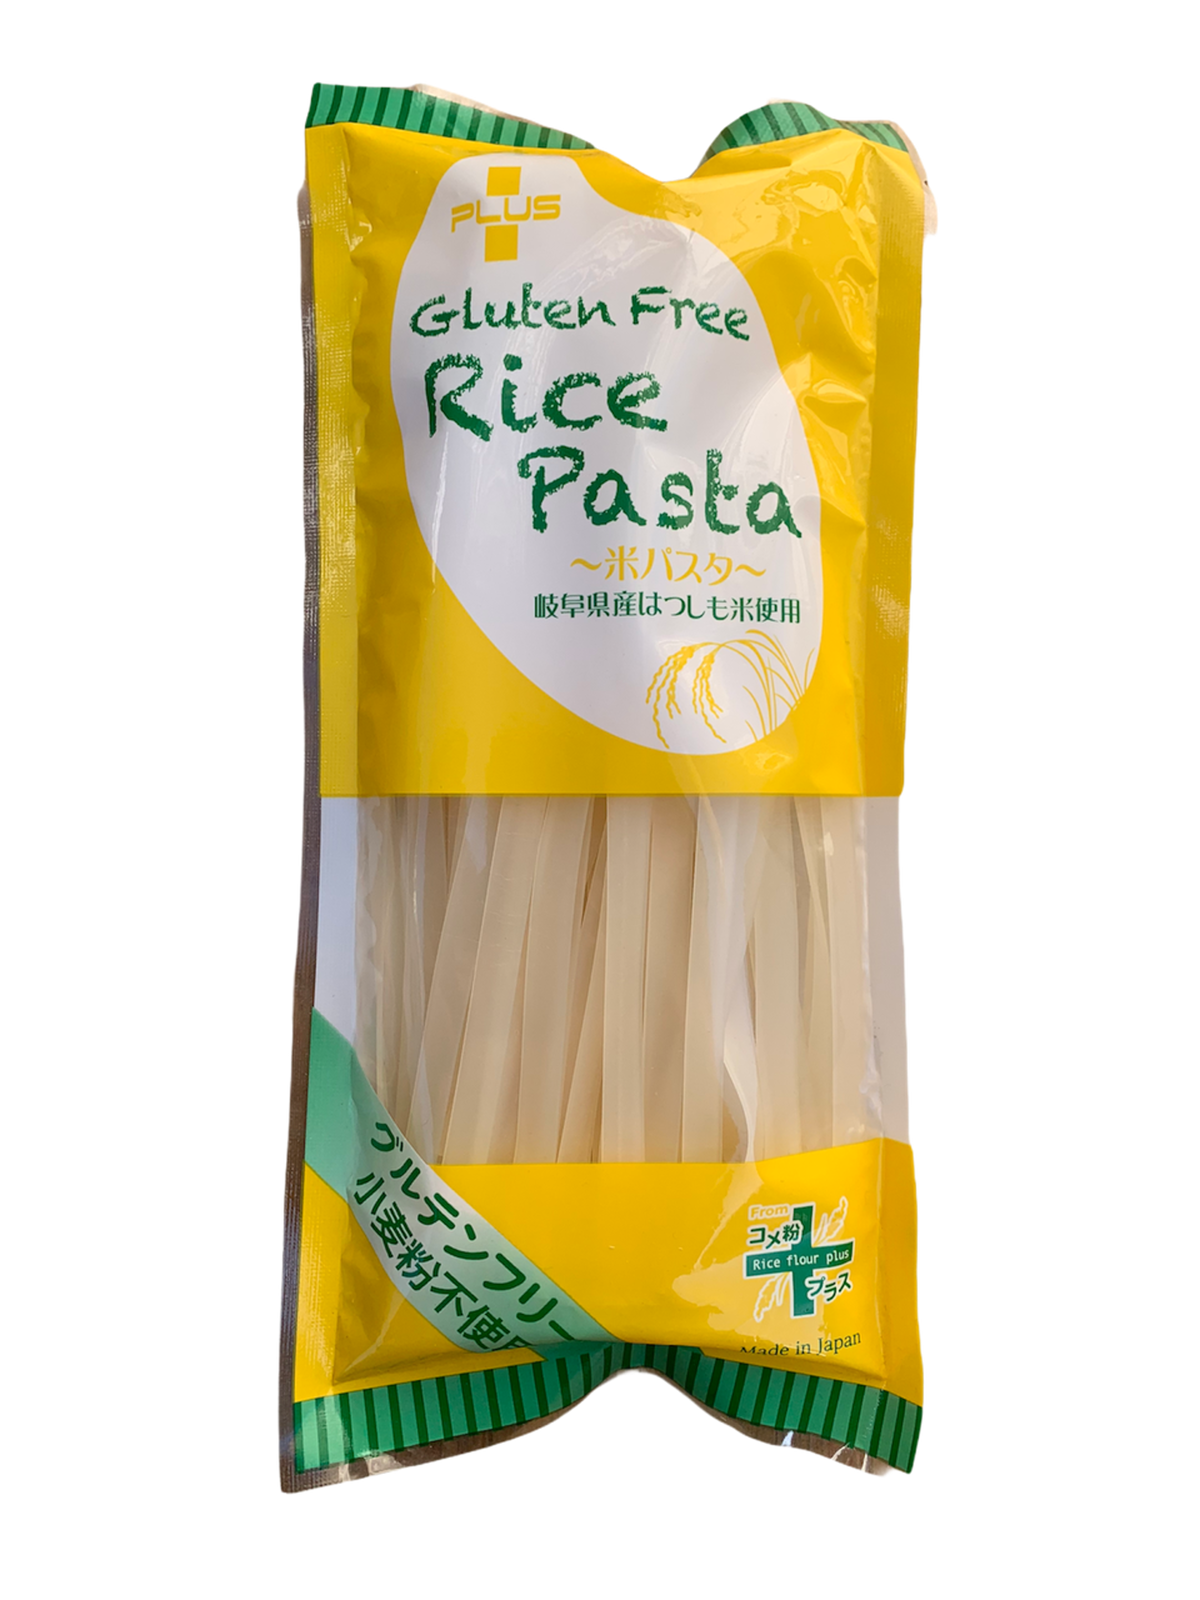 Gluten Free ライスパスタ フィットチーネ 白米パスタ Koso Store S